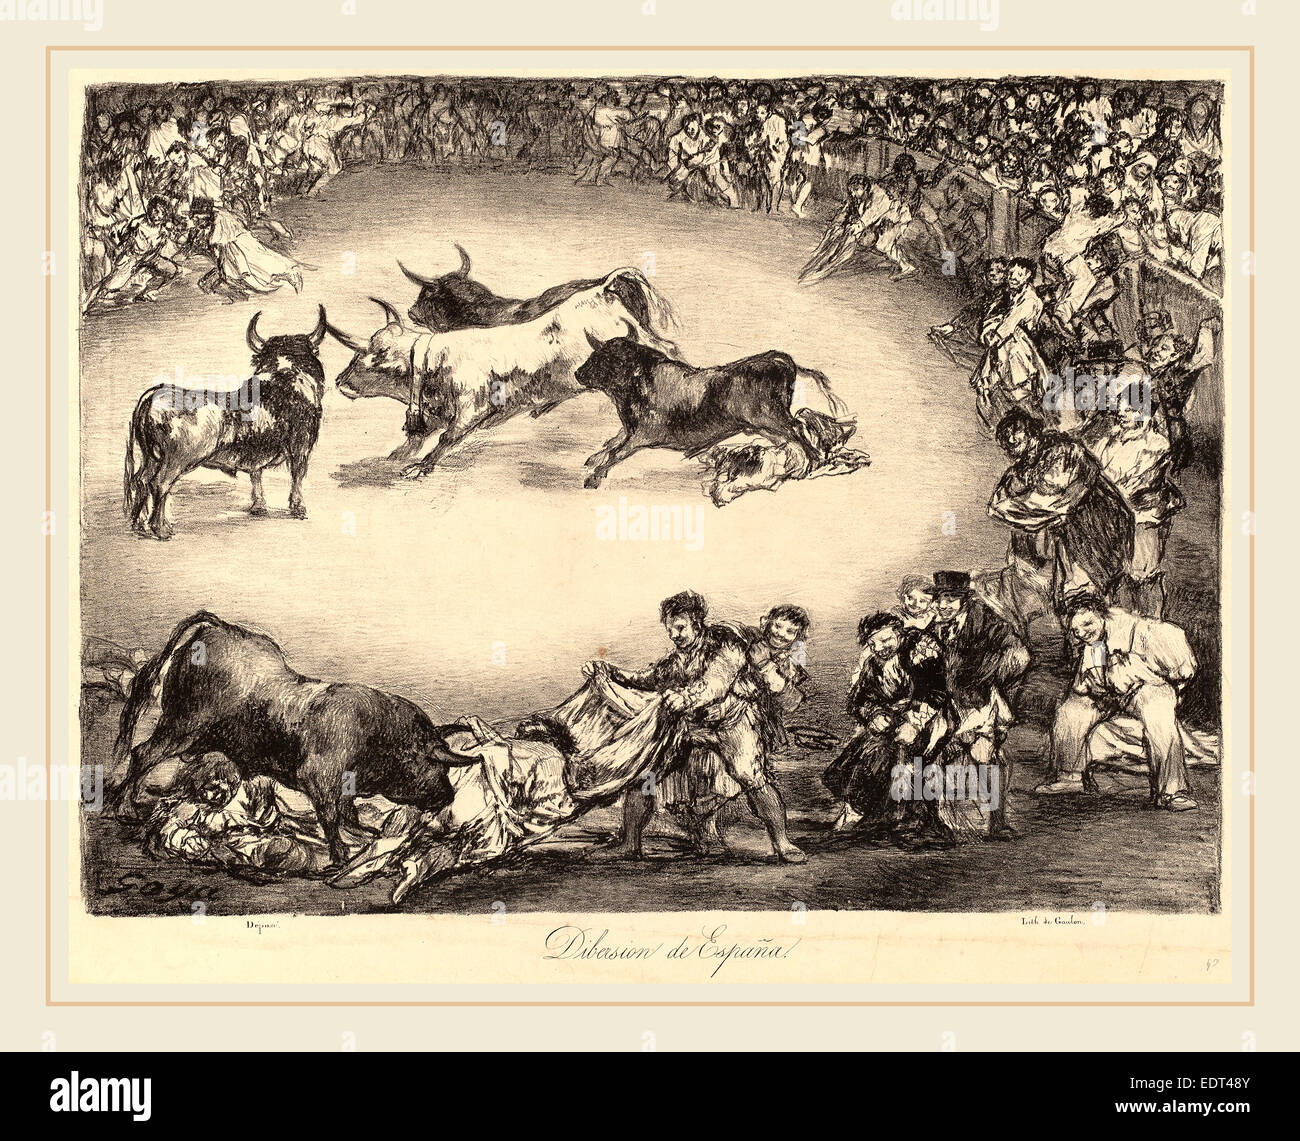 Francisco de Goya, Dibersion de España (Spanish Entertainment), Spanish, 1746-1828, 1825, lithograph on wove paper Stock Photo